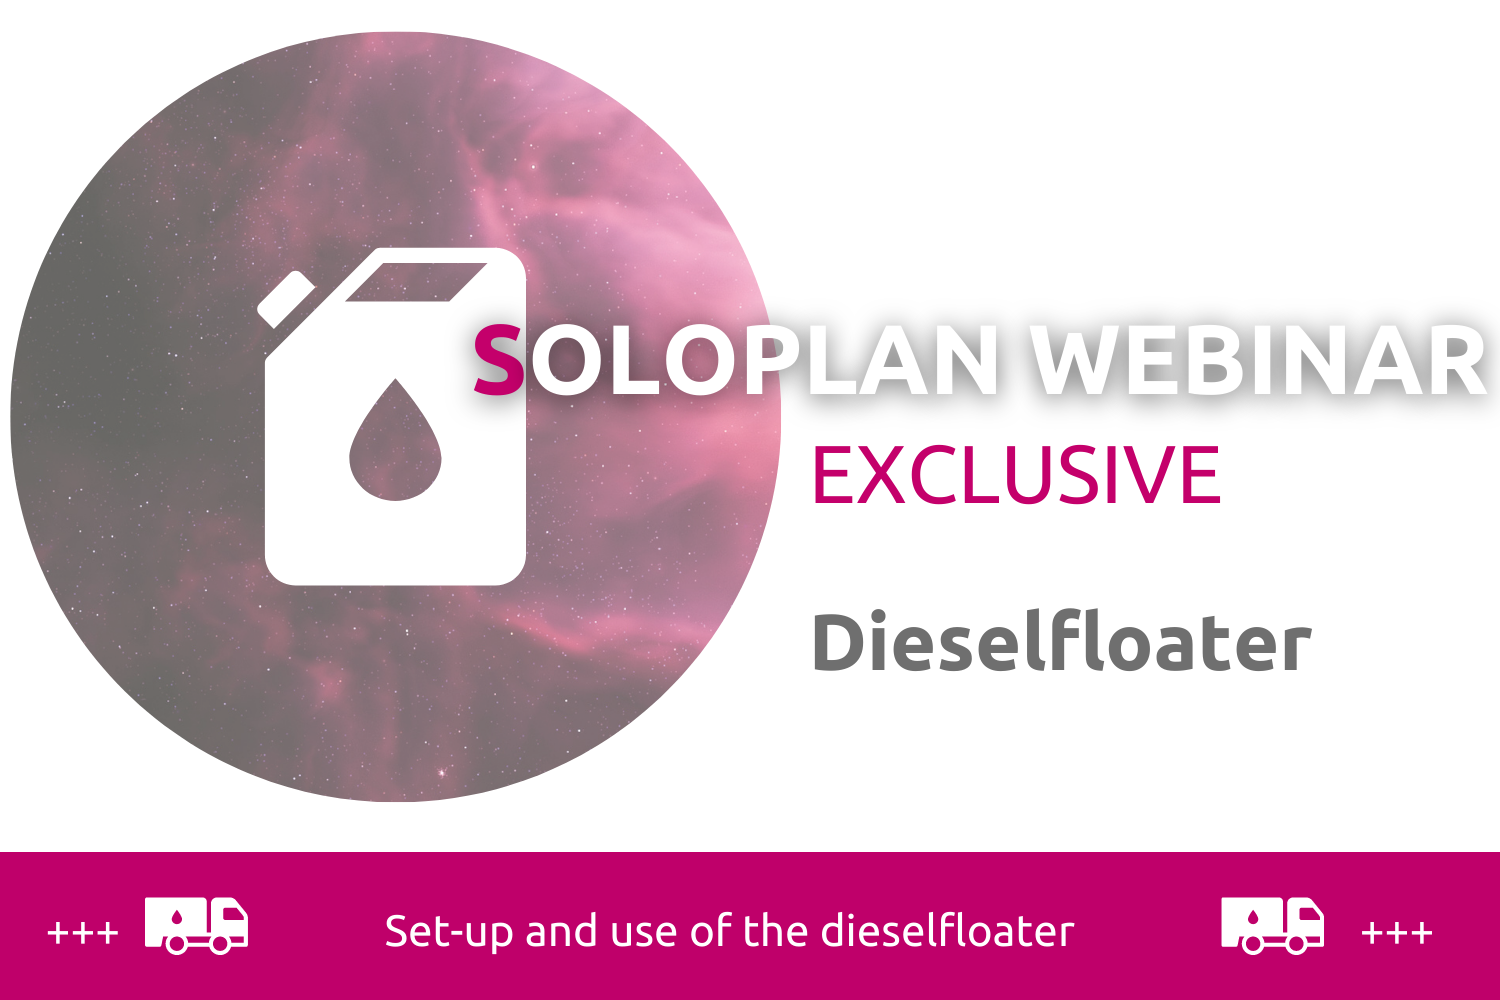 Soloplan WEBINAR EXCLUSIVE: All about dieselfloater